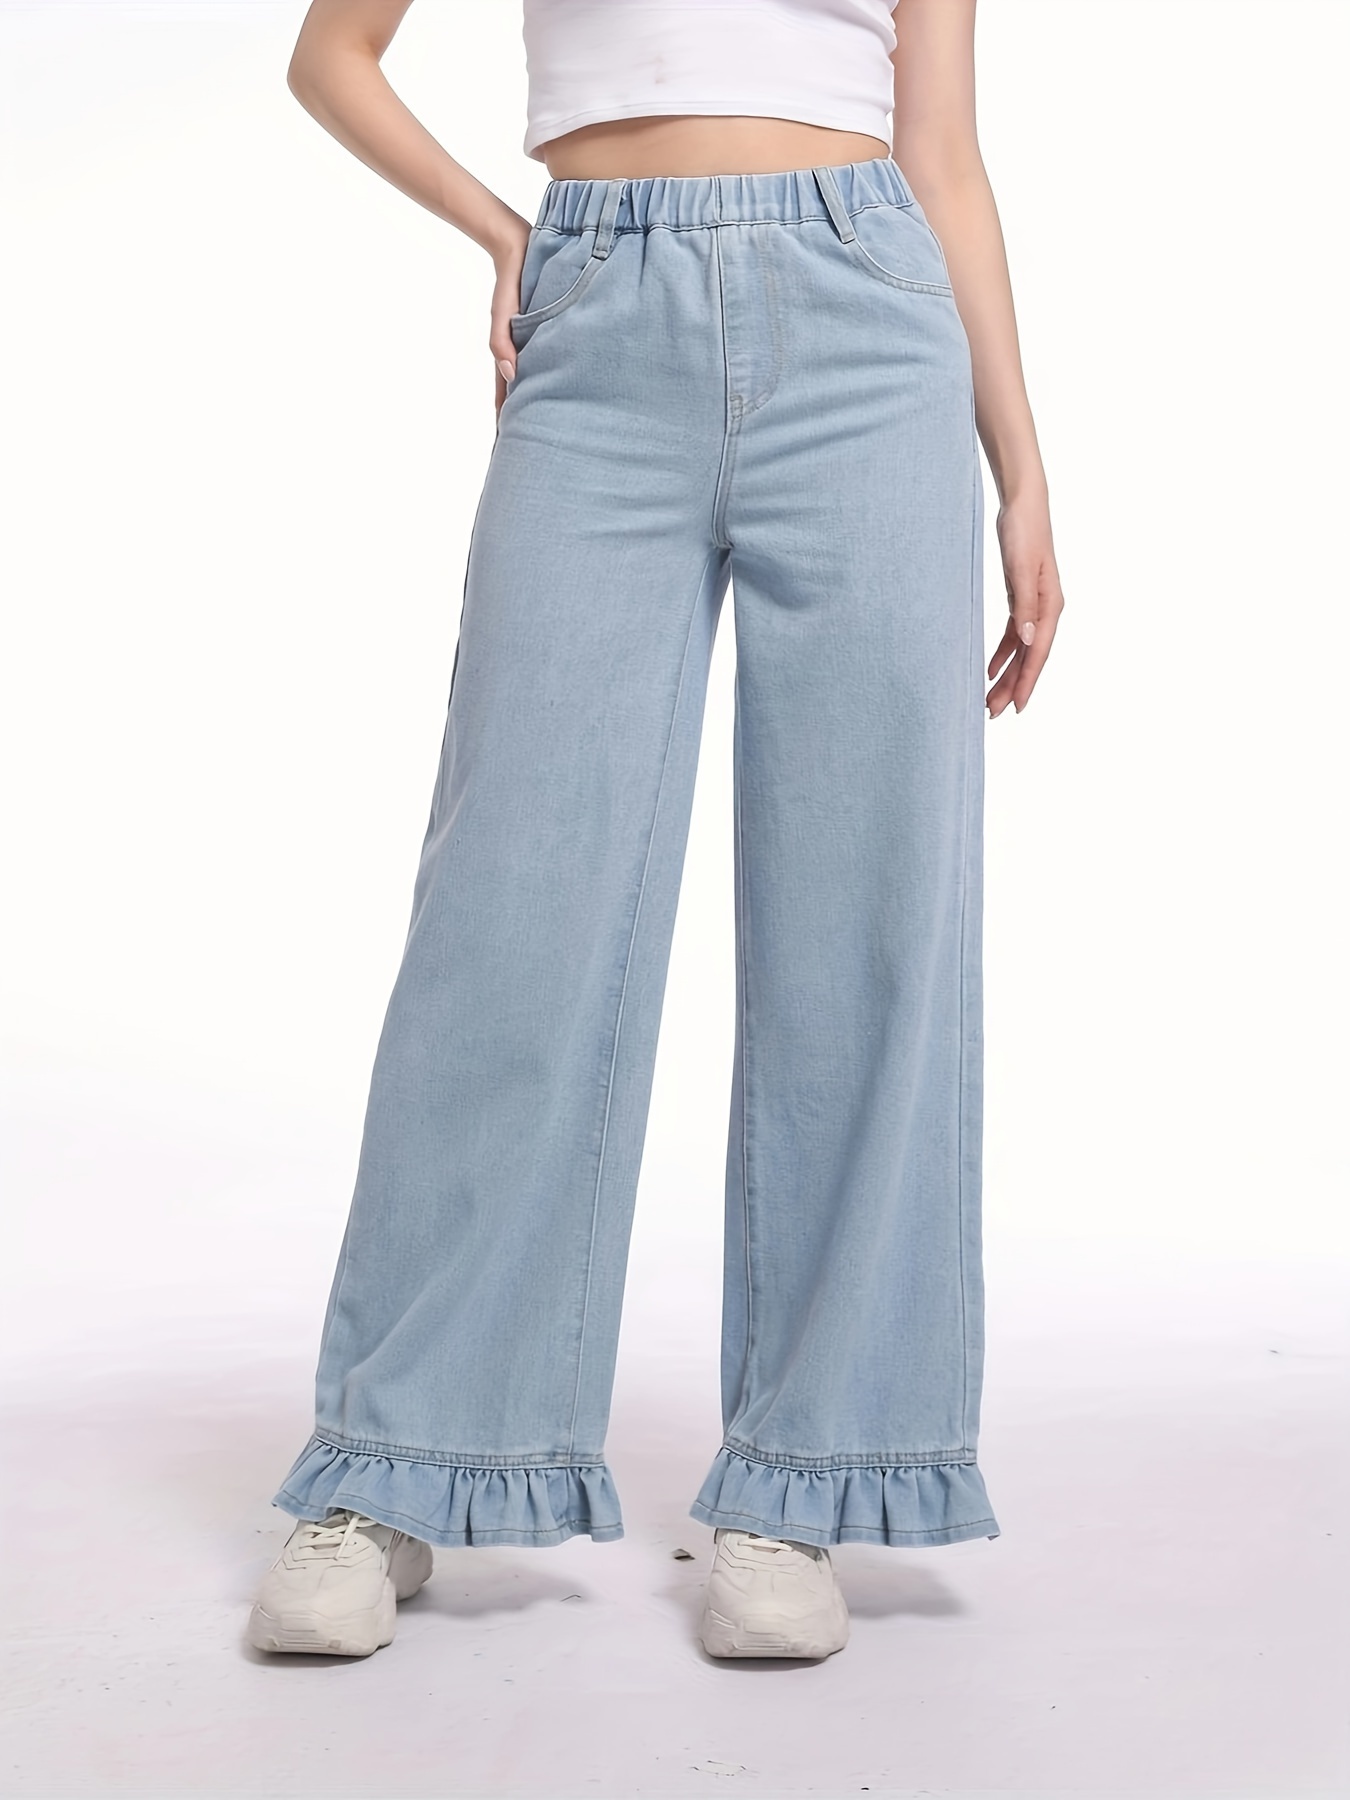 3-12t Jeans For Girls Elegant Bow Cute Denim Pants Sweet Bowknot